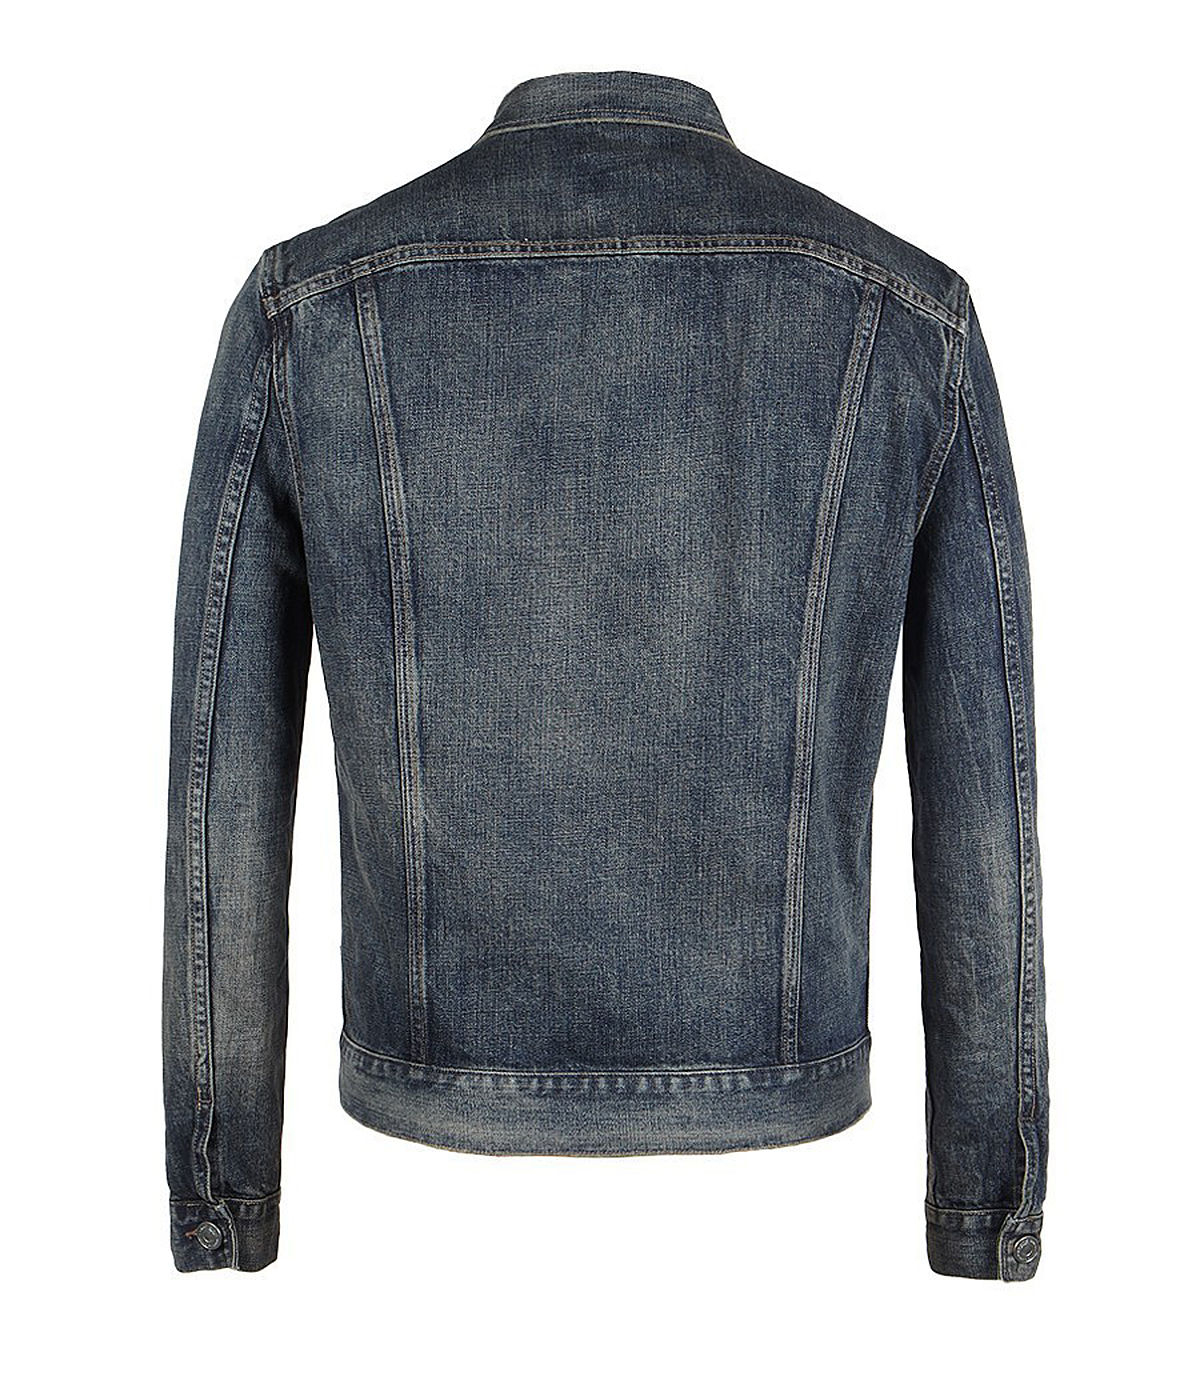 AllSaints Fremont Denim Jacket in Indigo (Blue) for Men - Lyst